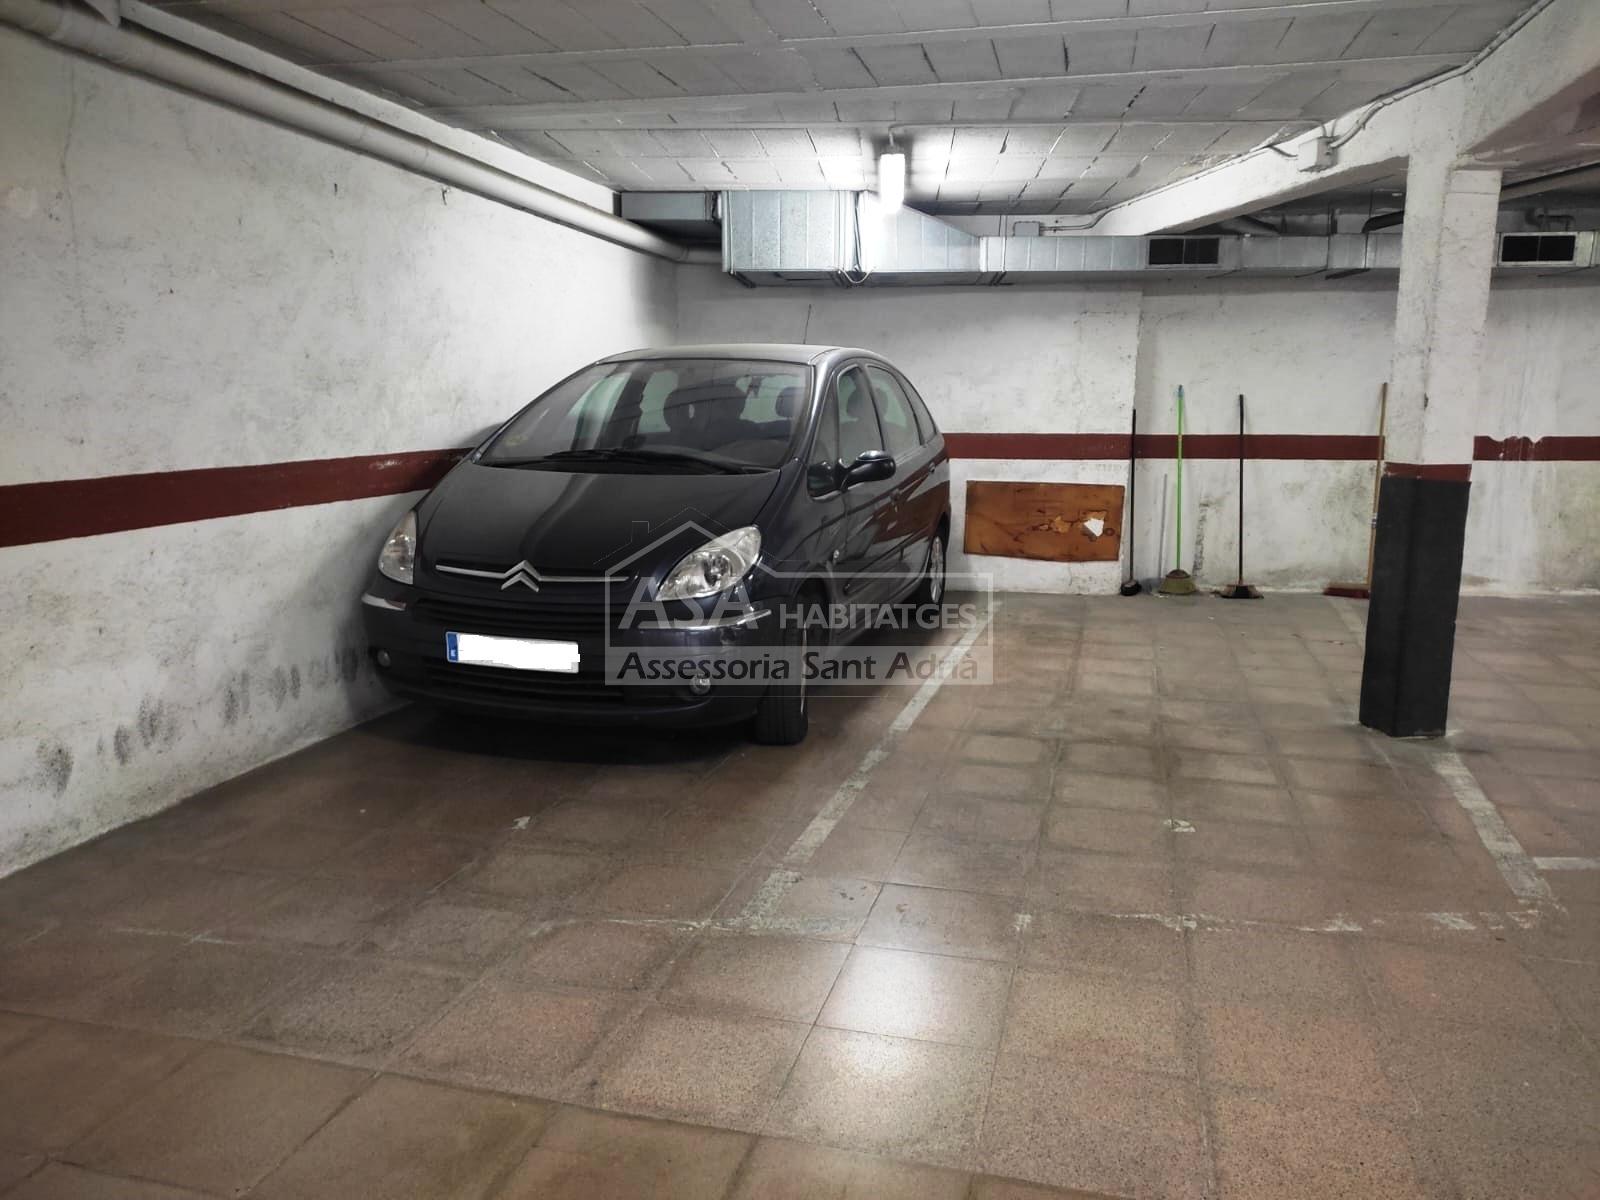 For sale of garage in Sant Adrià de Besòs